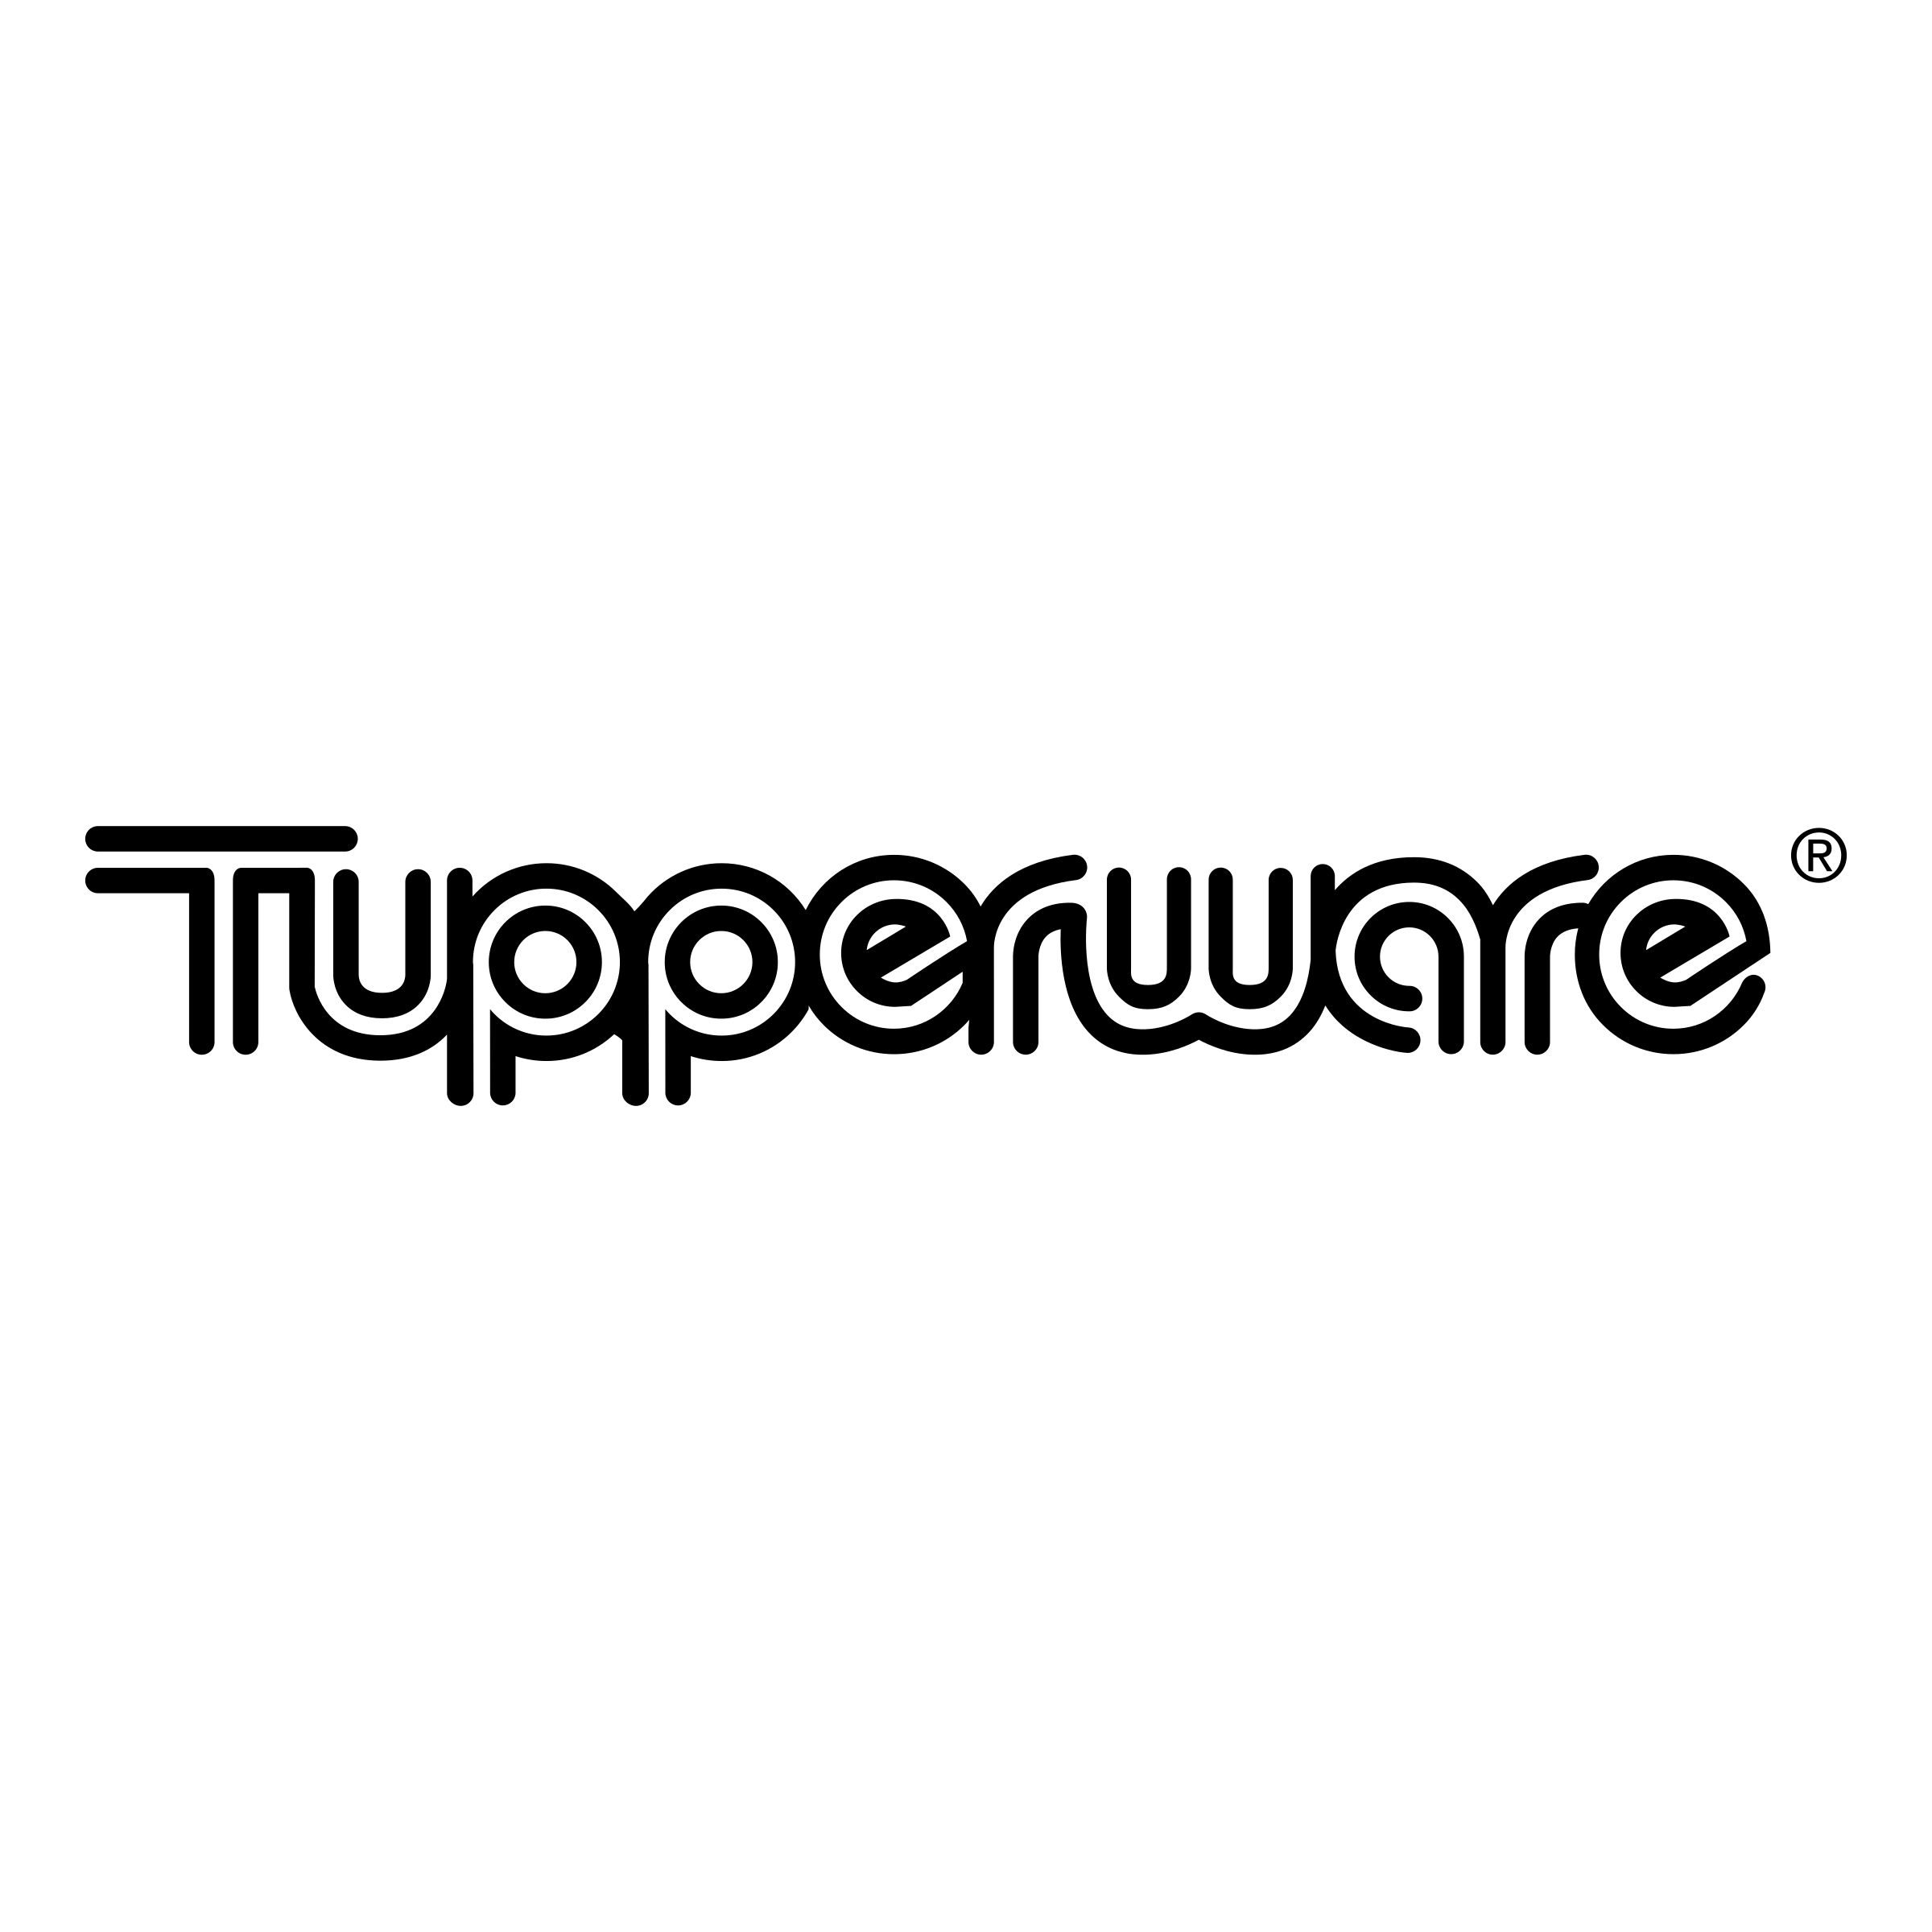 Tupperware Logo - Tupperware Logo PNG Transparent & SVG Vector - Freebie Supply